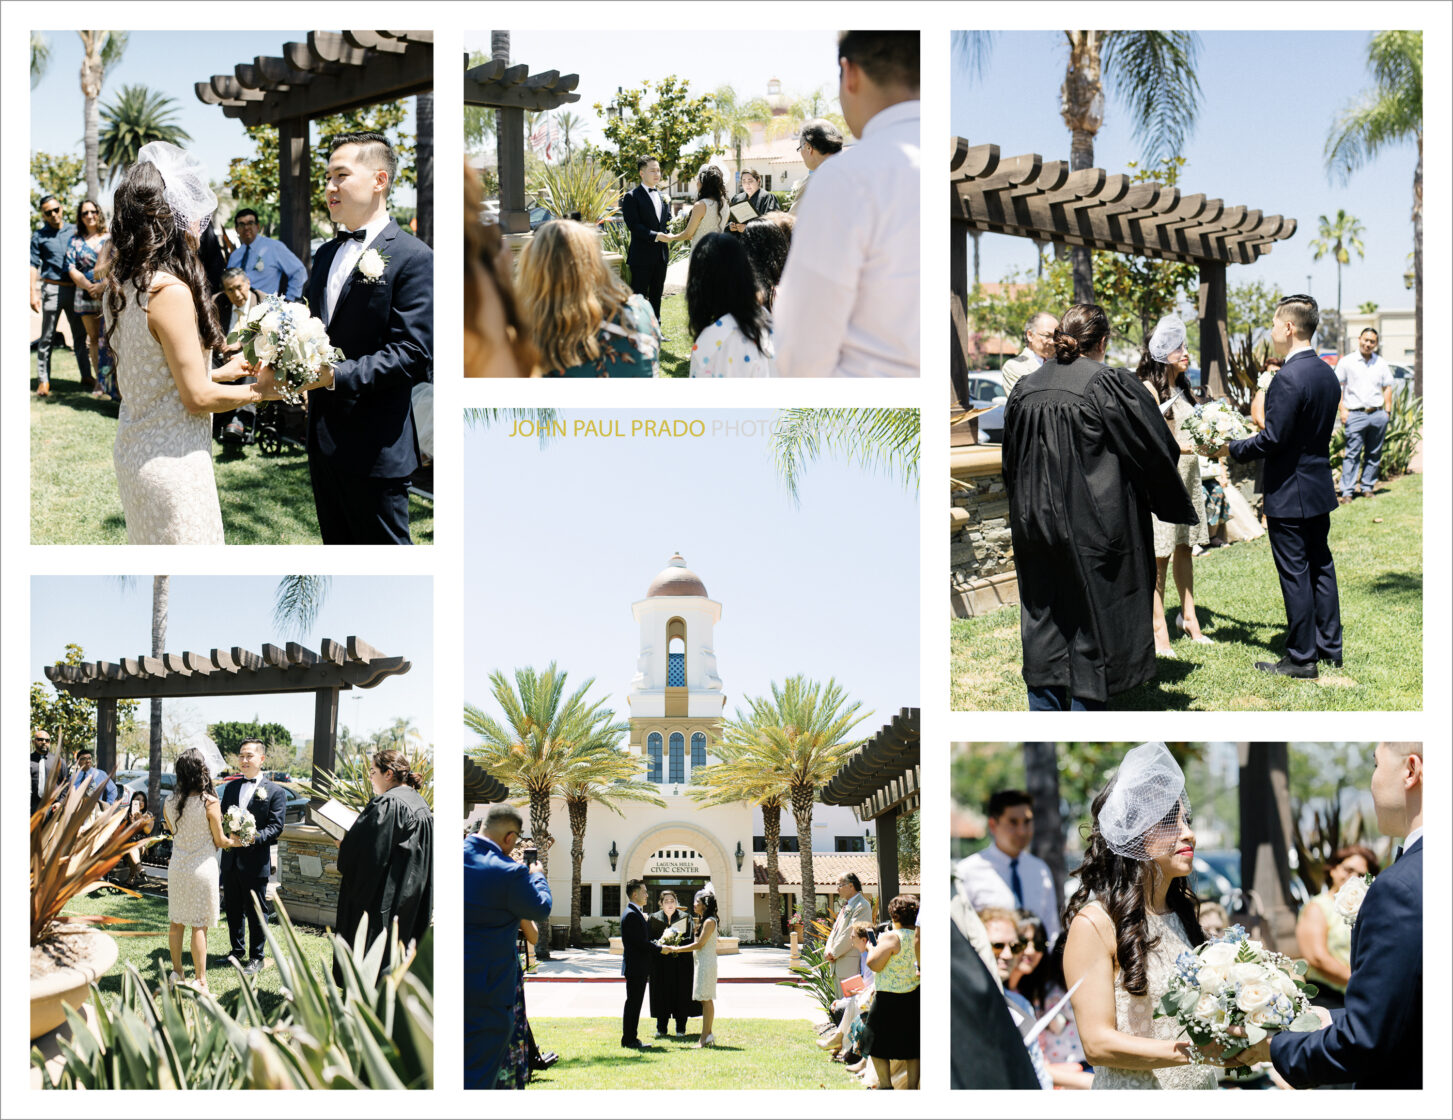 Wedding ceremony outdoors at Laguna Hills Civic Center